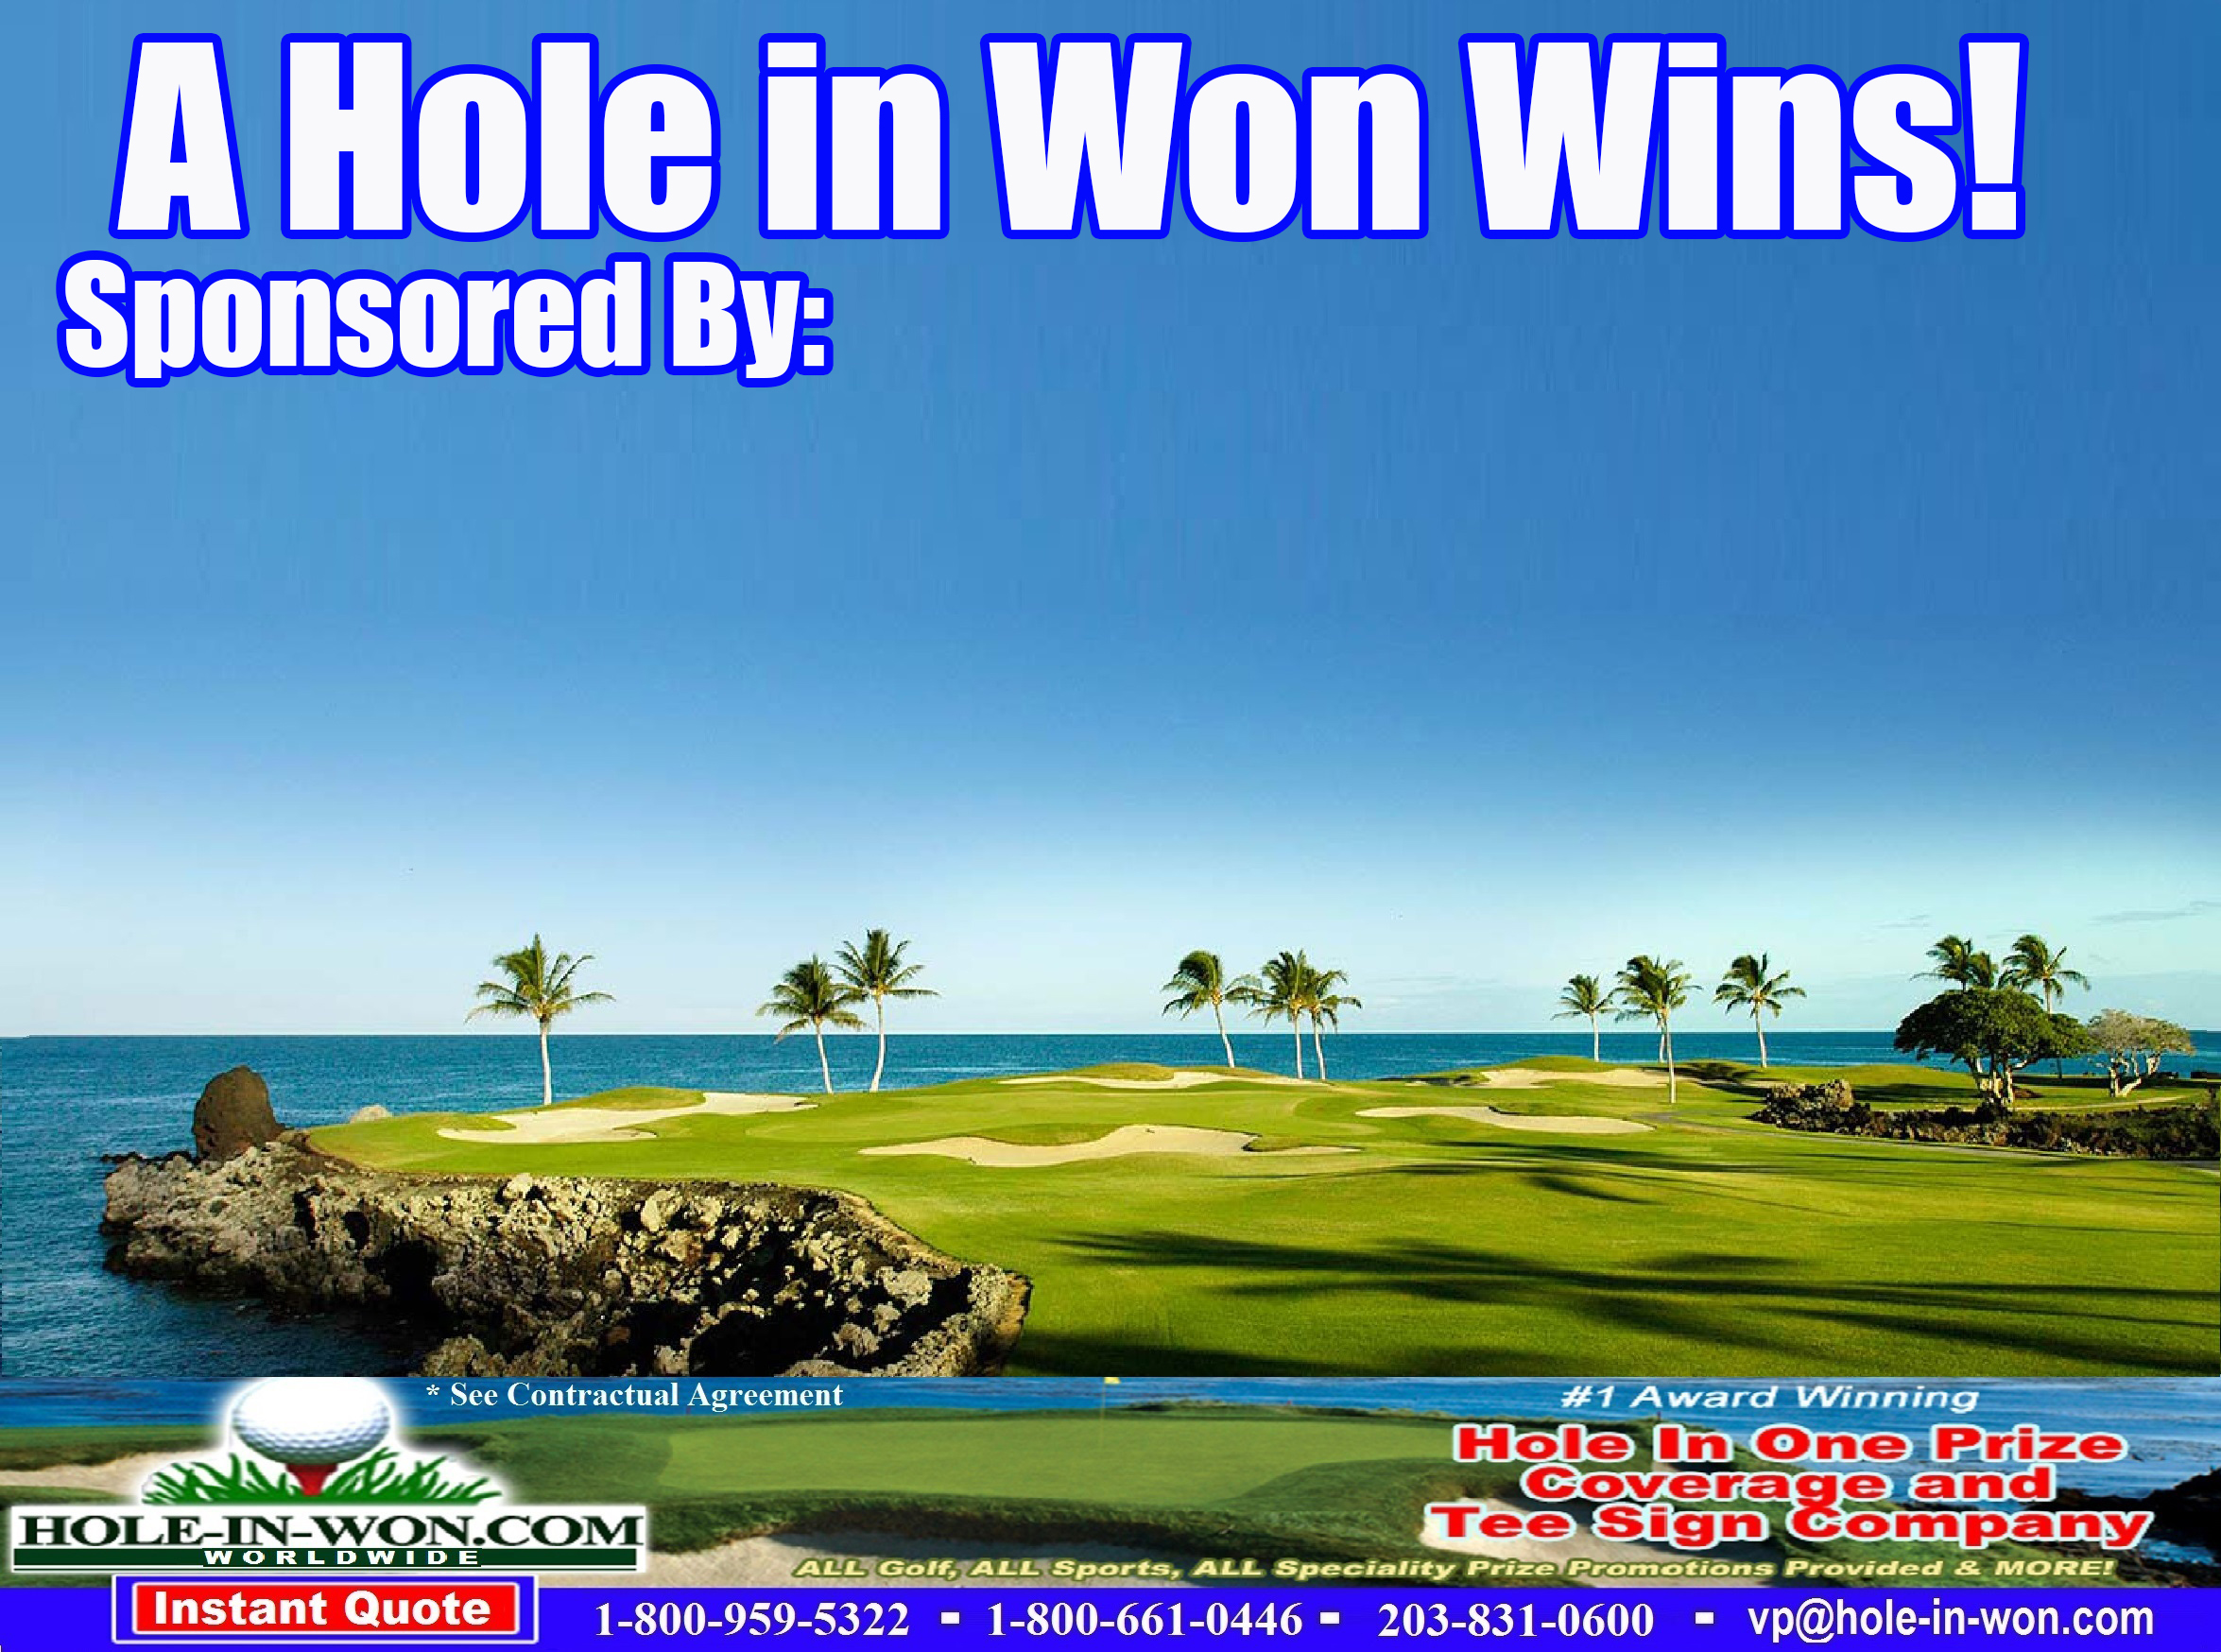 Hawaii Hole in One Insurance Golf Tee Sign